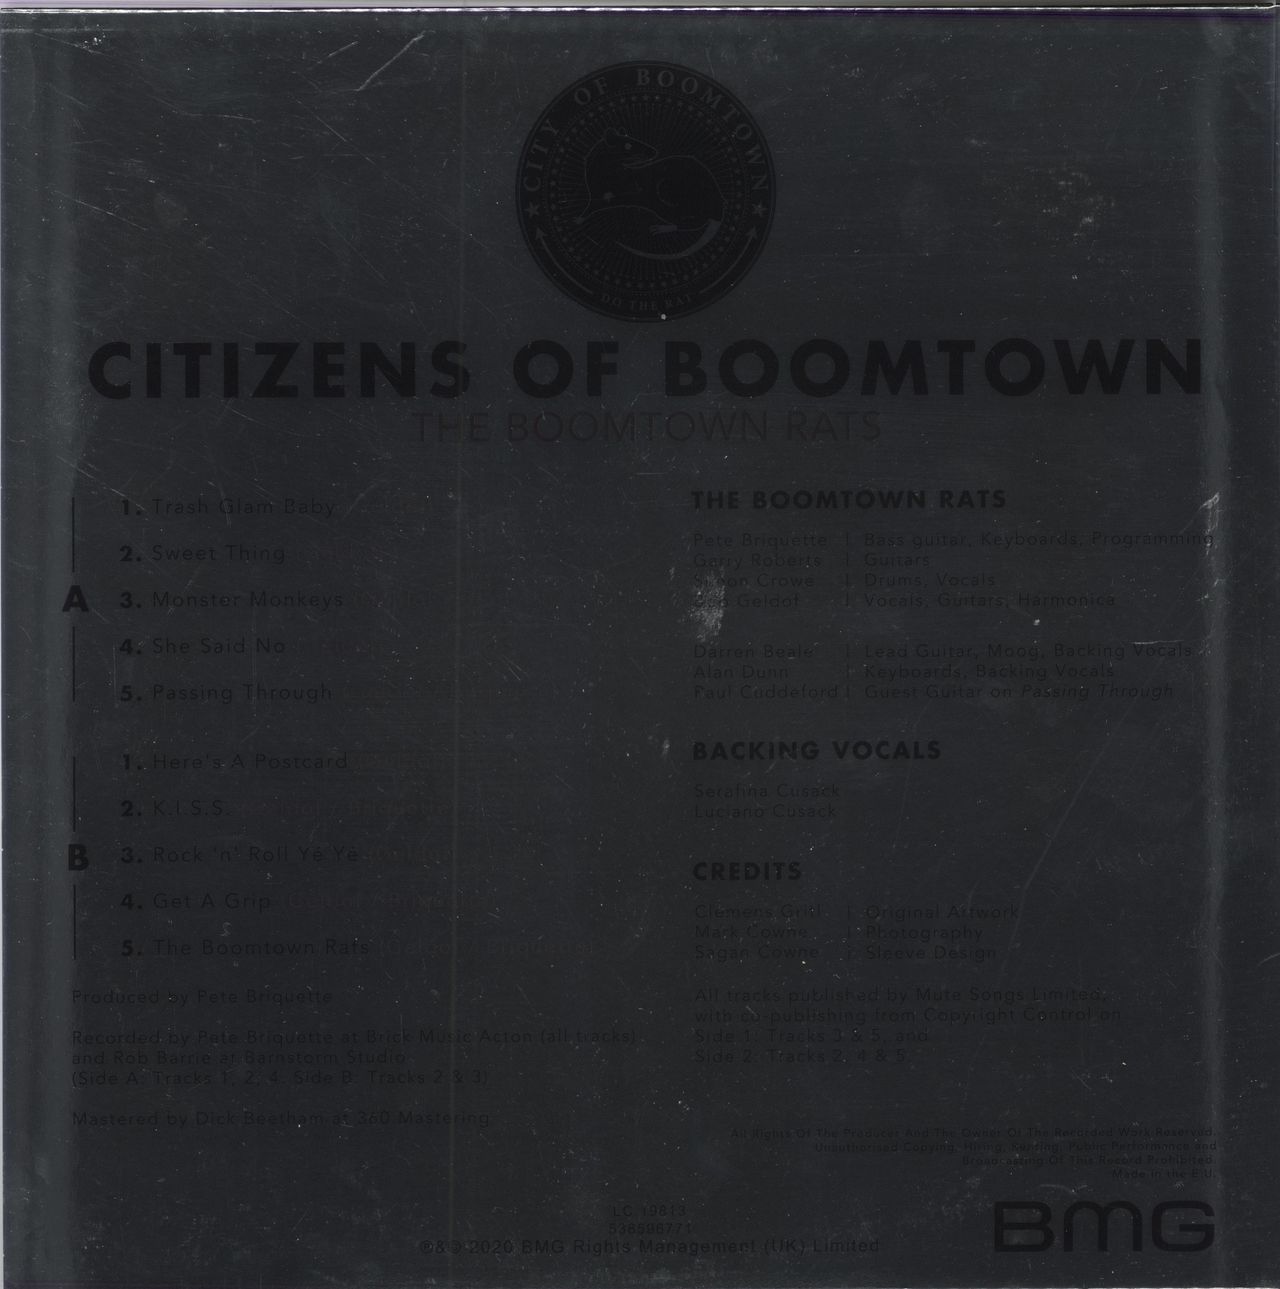 The Boomtown Rats Citizens Of Boomtown - Gold Vinyl + Metallic Sleeve UK vinyl LP album (LP record) 4050538596779